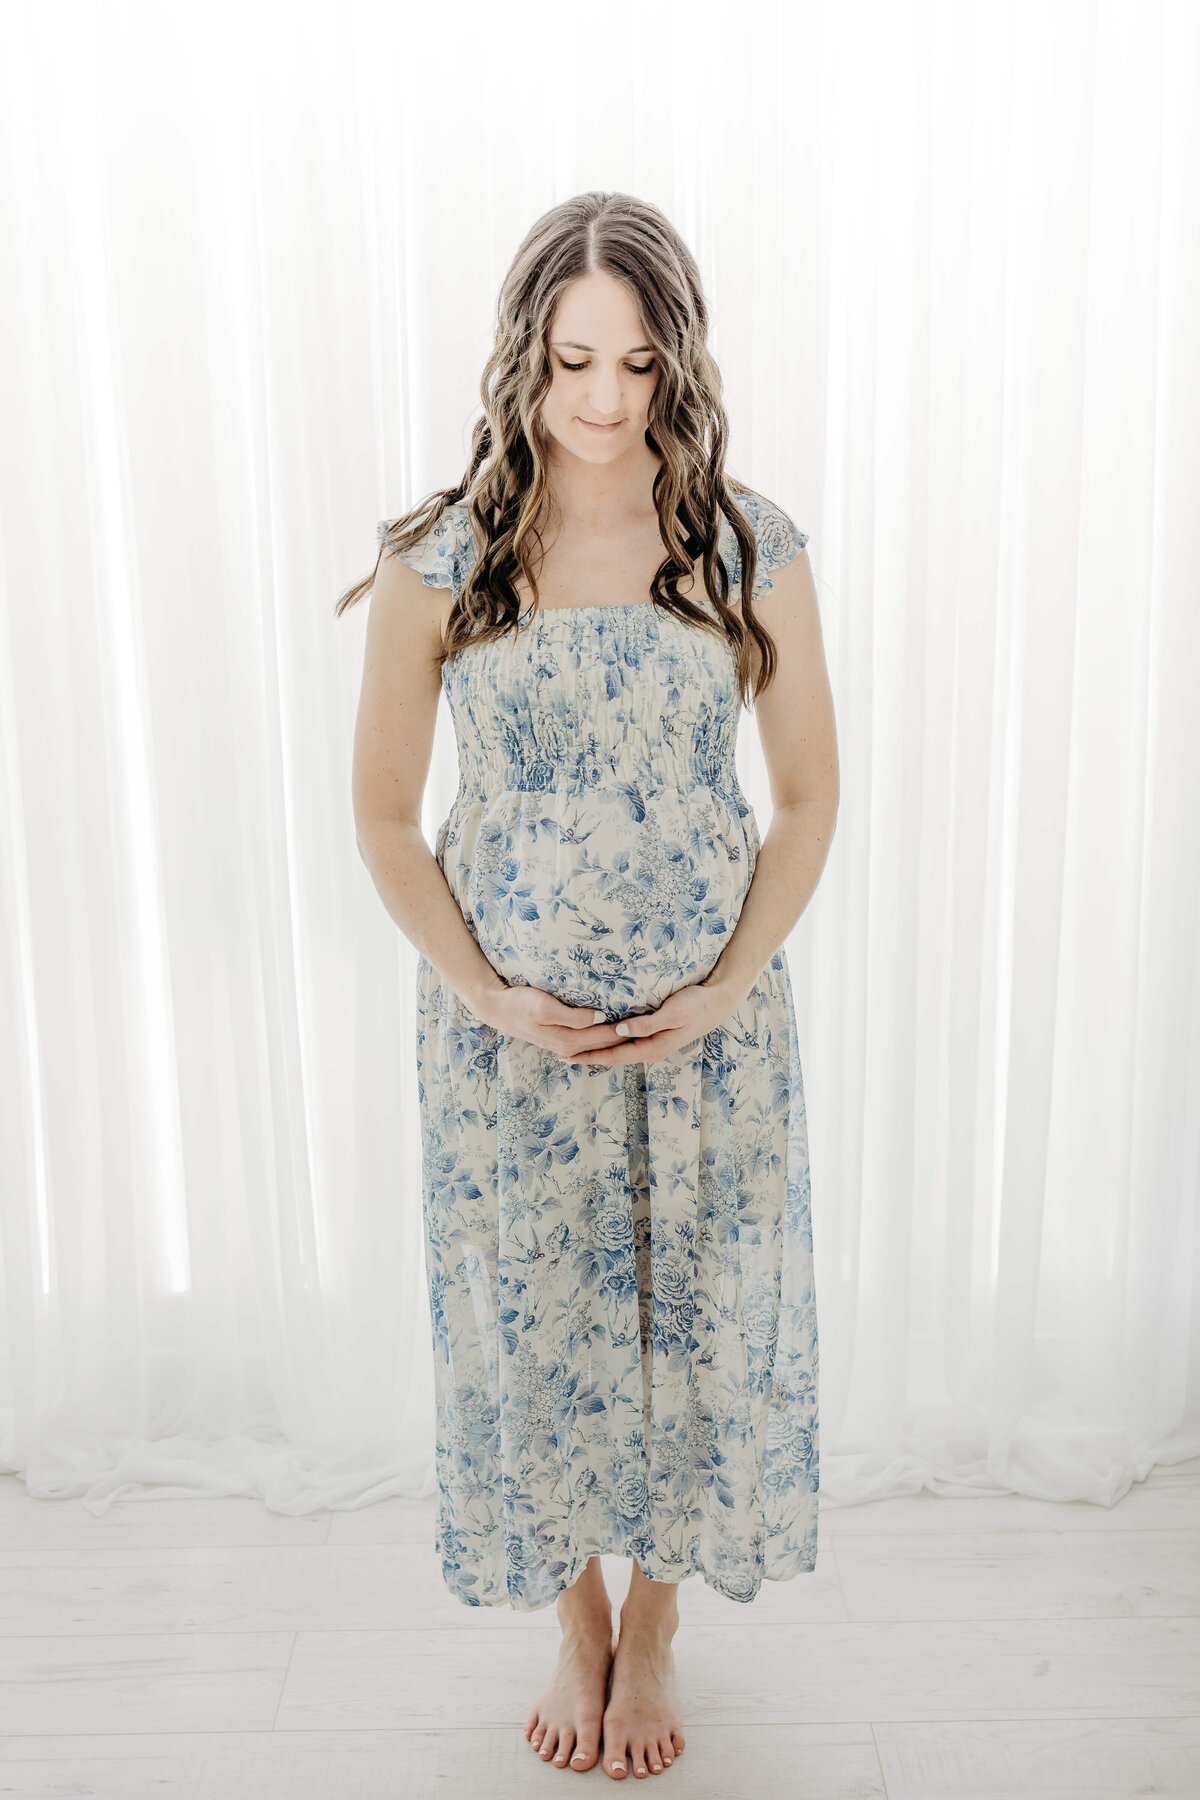 Mom in blue dress backlit maternity session